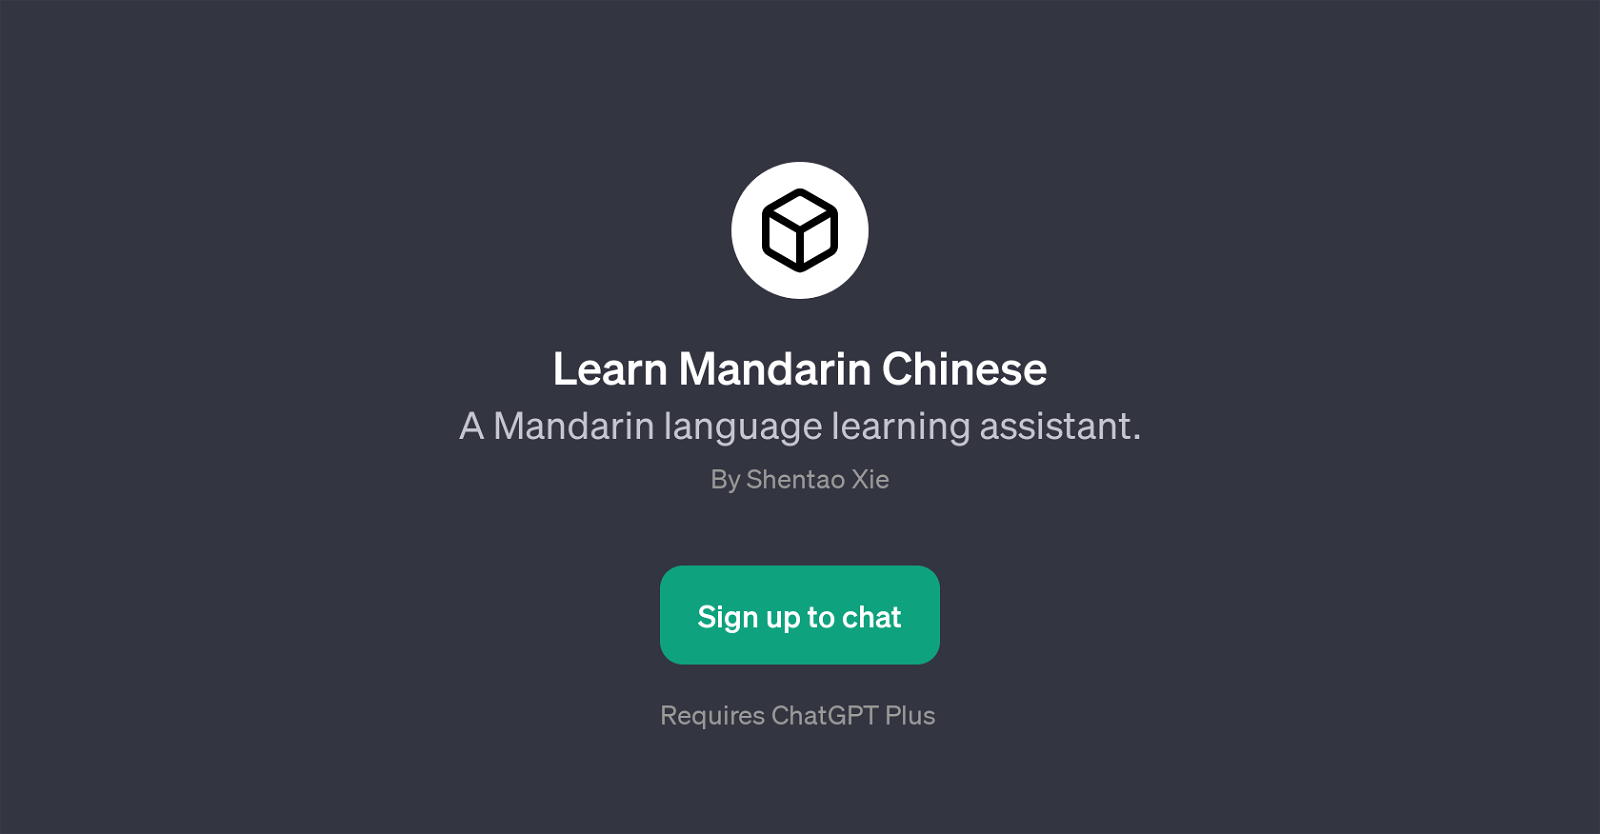 Learn Mandarin Chinese website